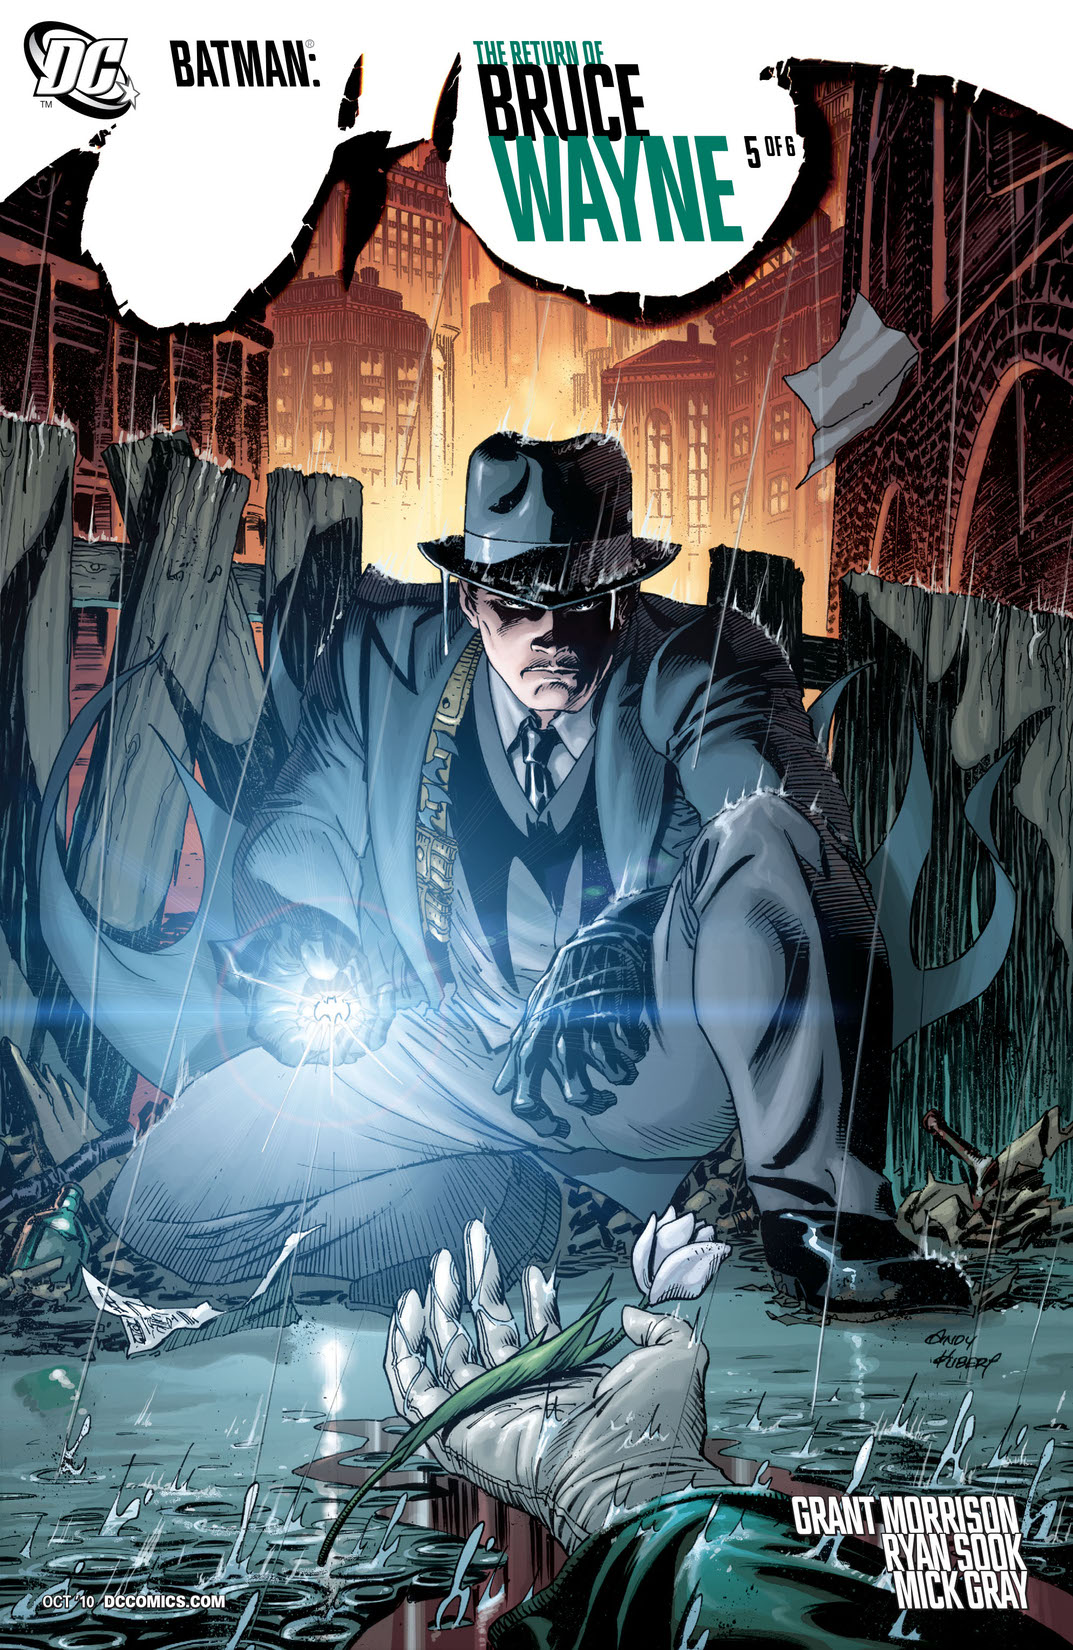 Batman: The Return of Bruce Wayne #5 preview images